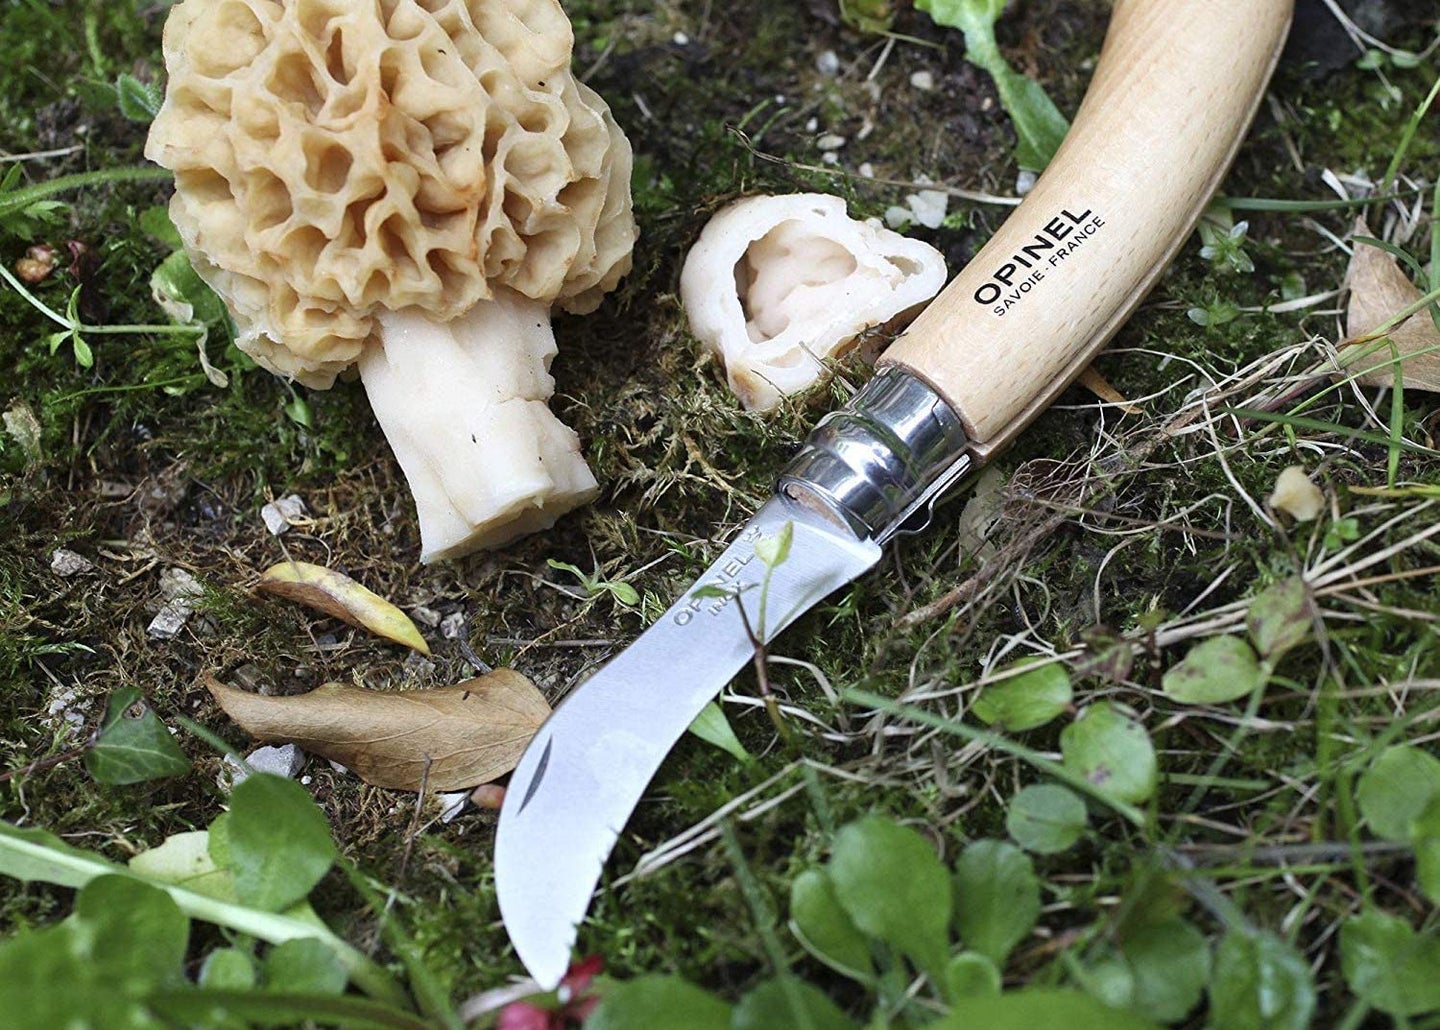 Mushroom hunting knife and morel mushroom.